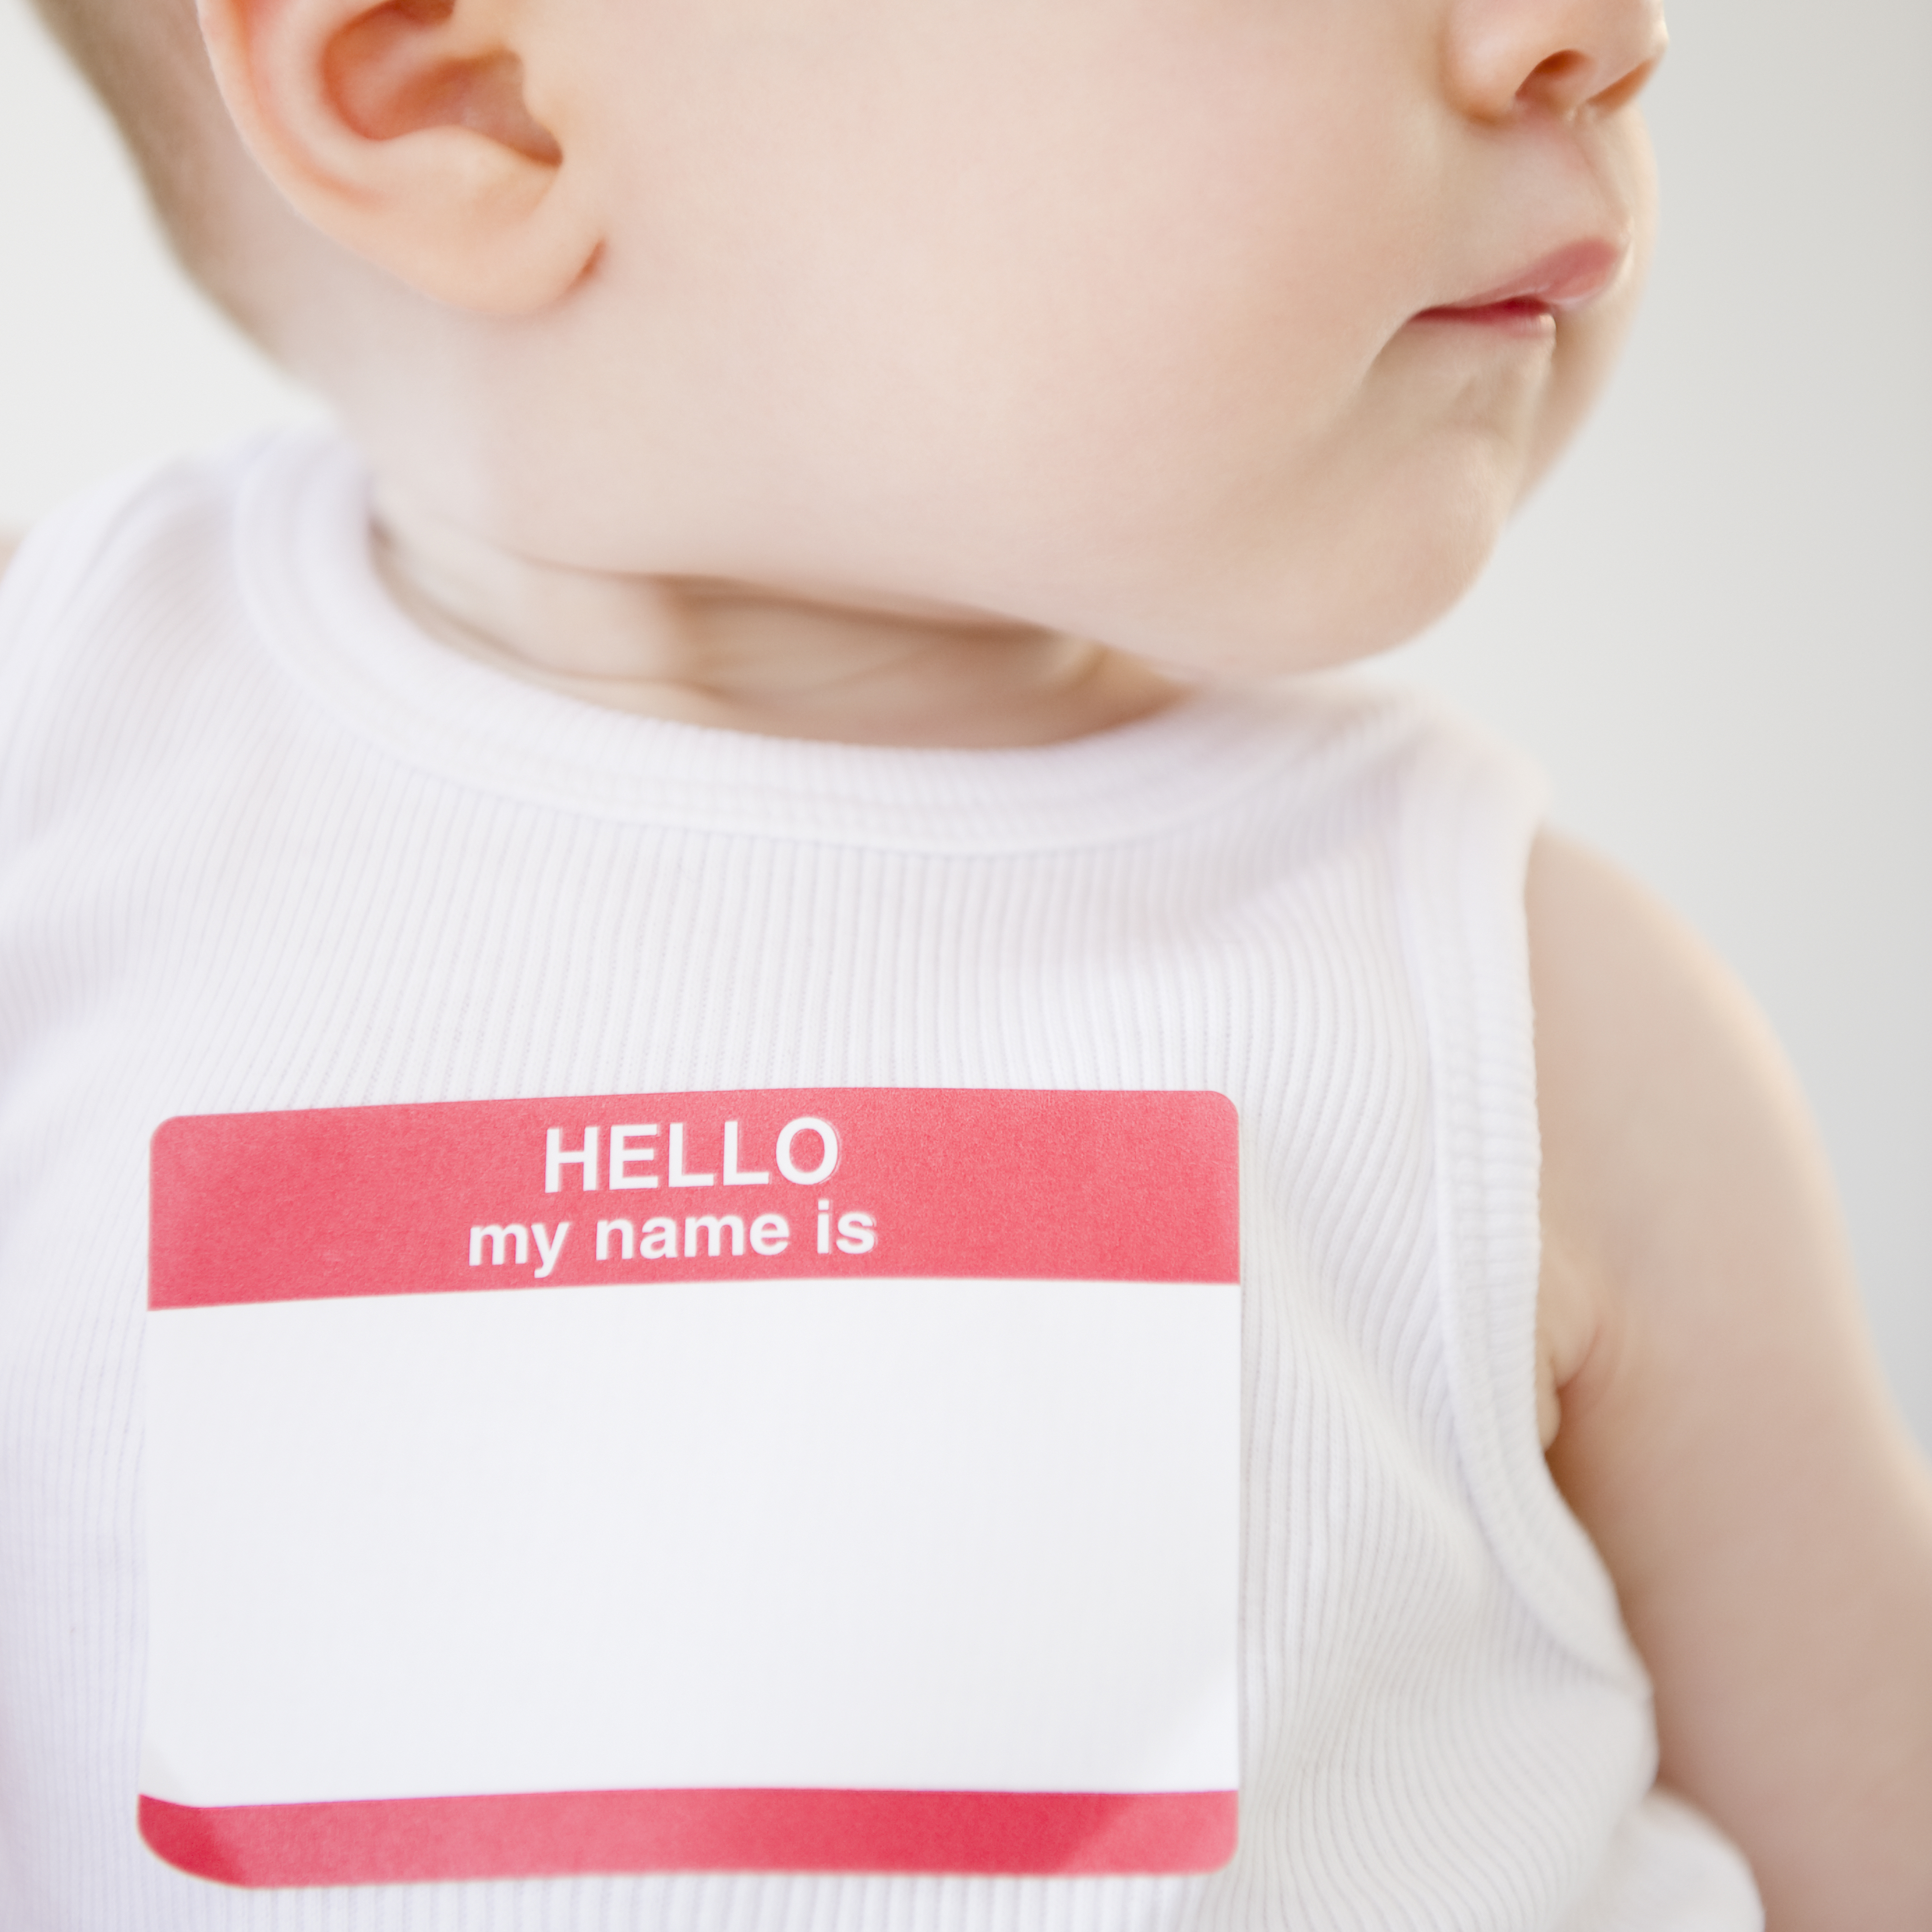 Baby wearing name tag